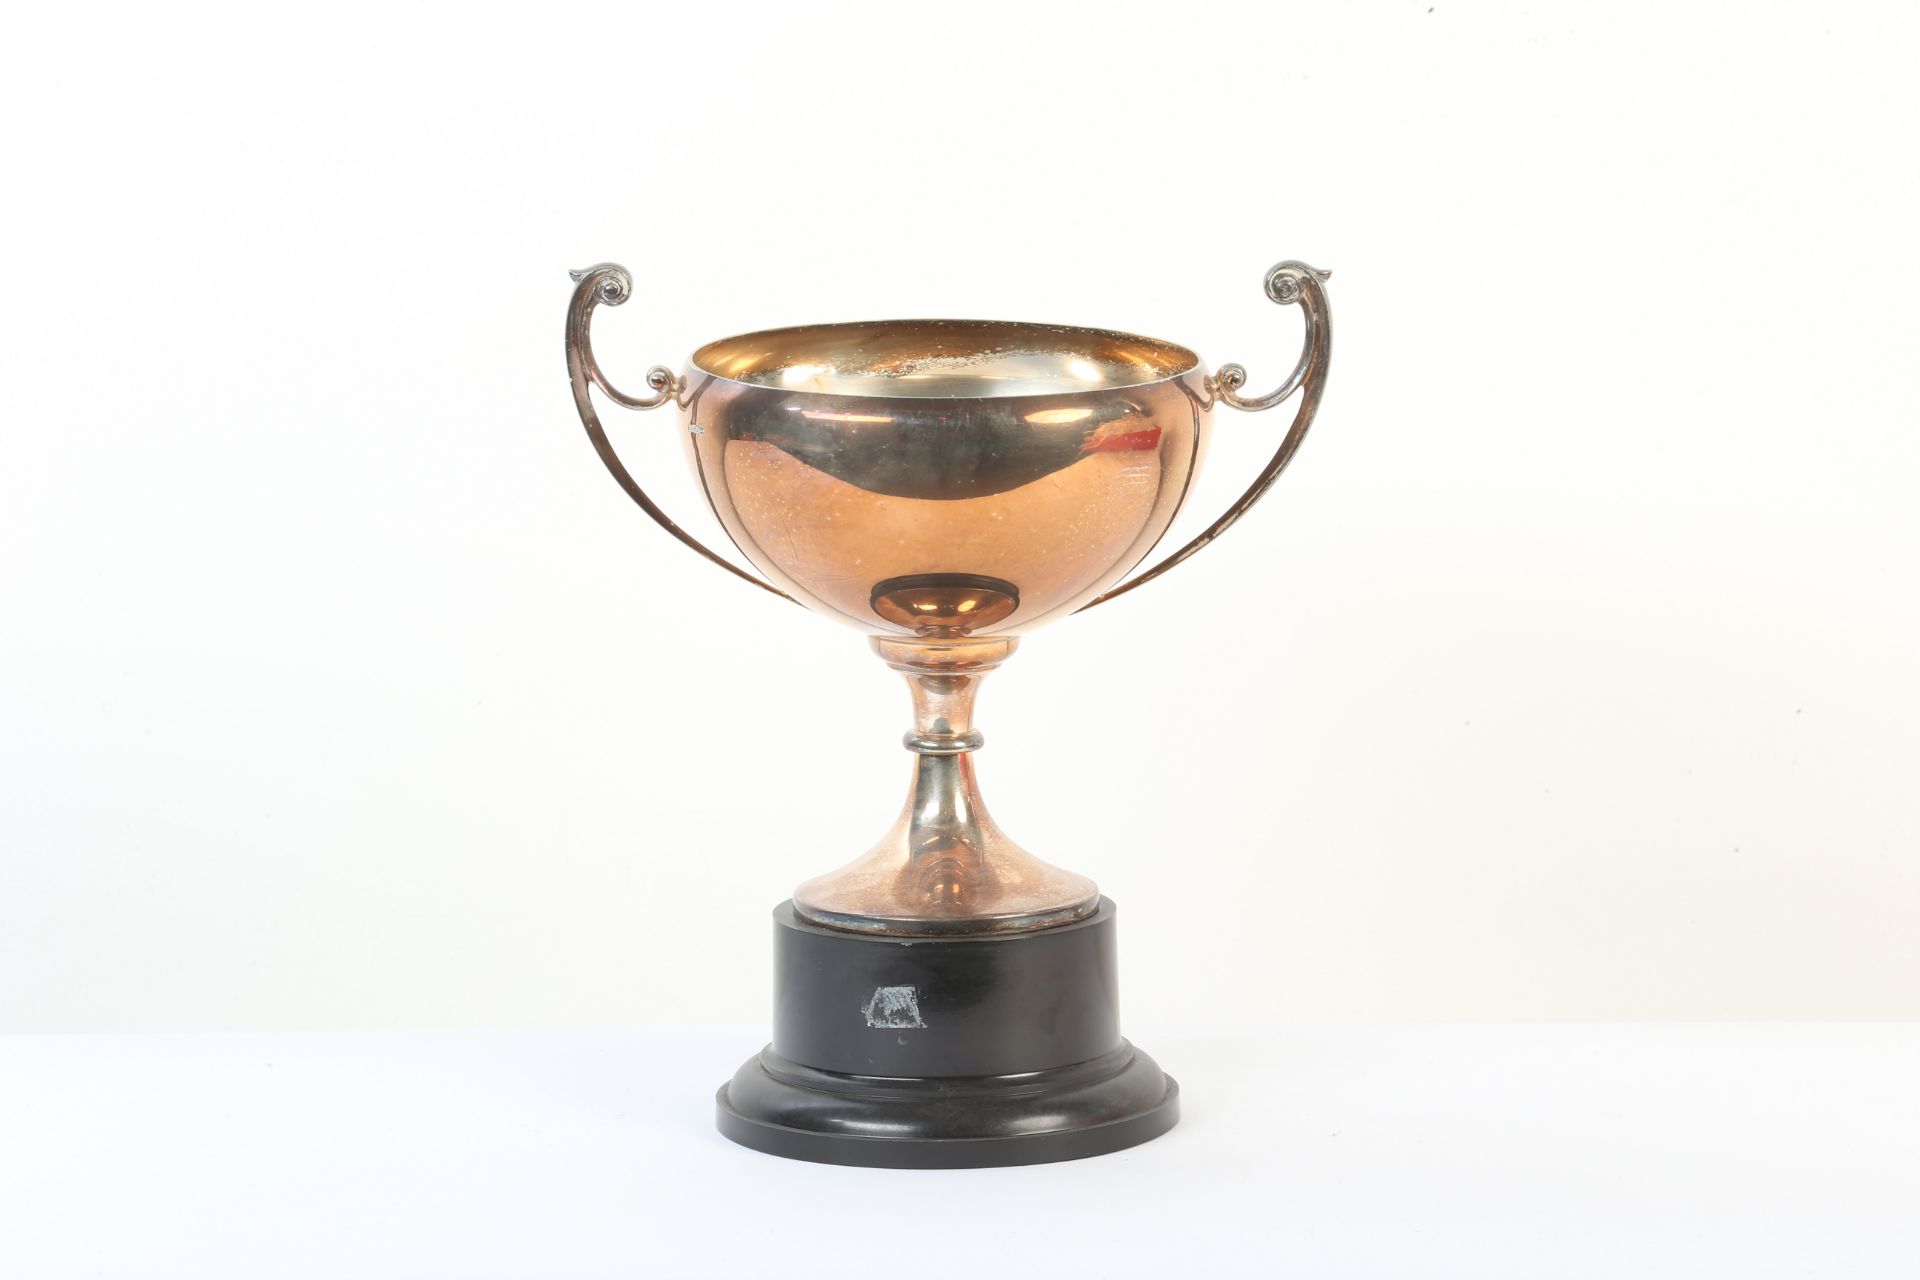 Mike Hailwood - An Oulton Park BMCRC trophy, 1957